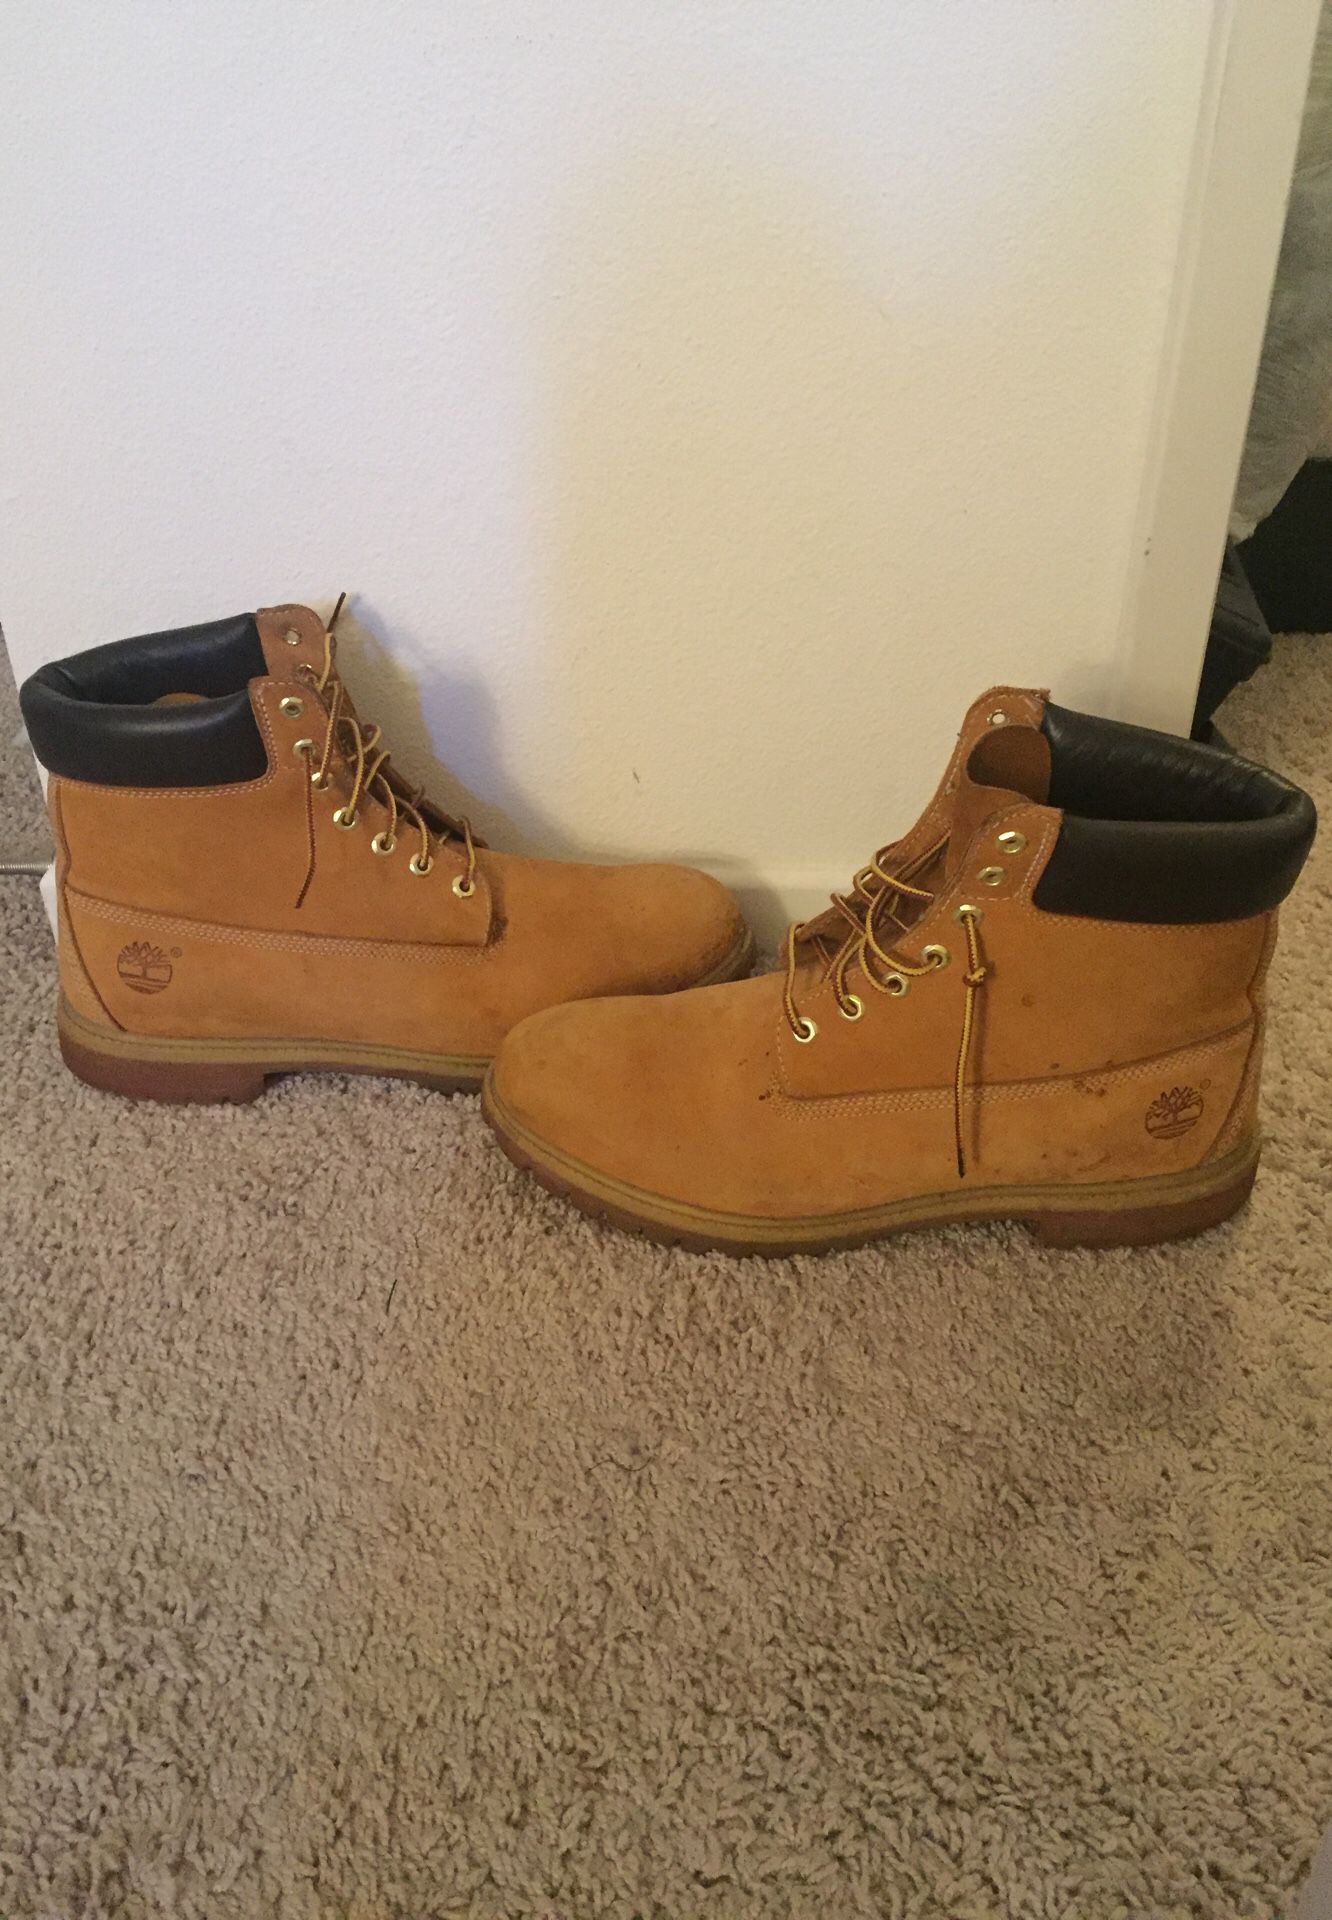 Timberland boots “tan” size 15